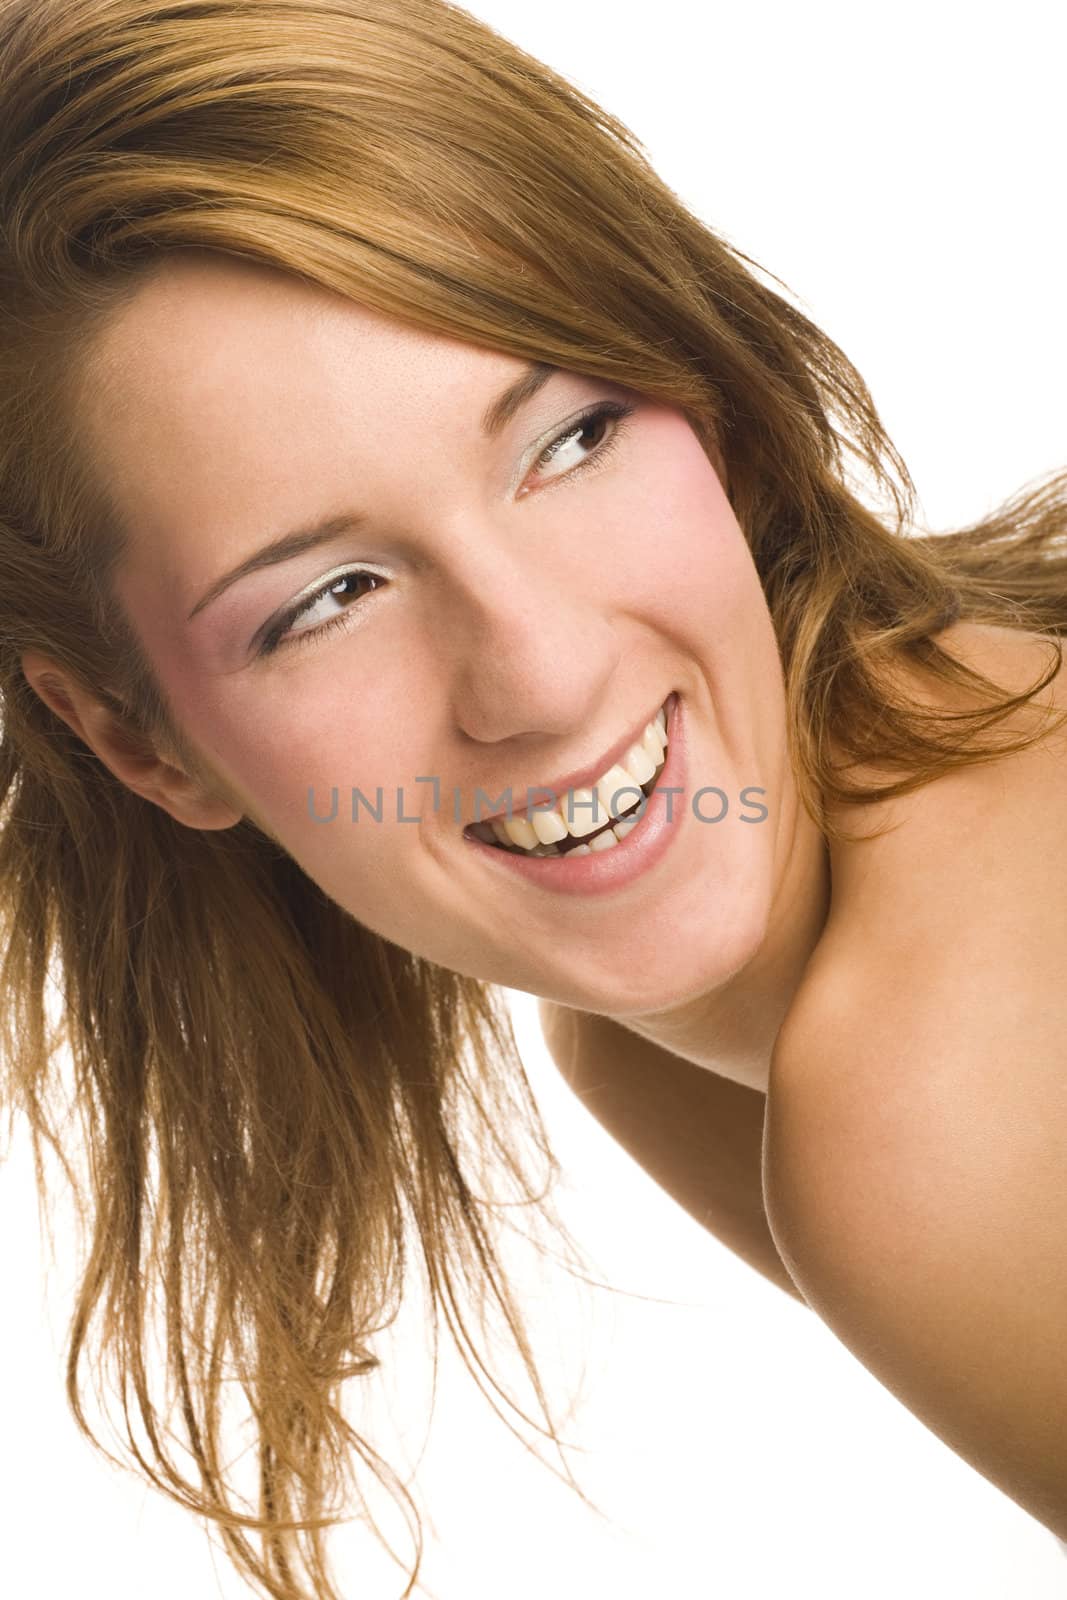 Smiling girl by jdwild